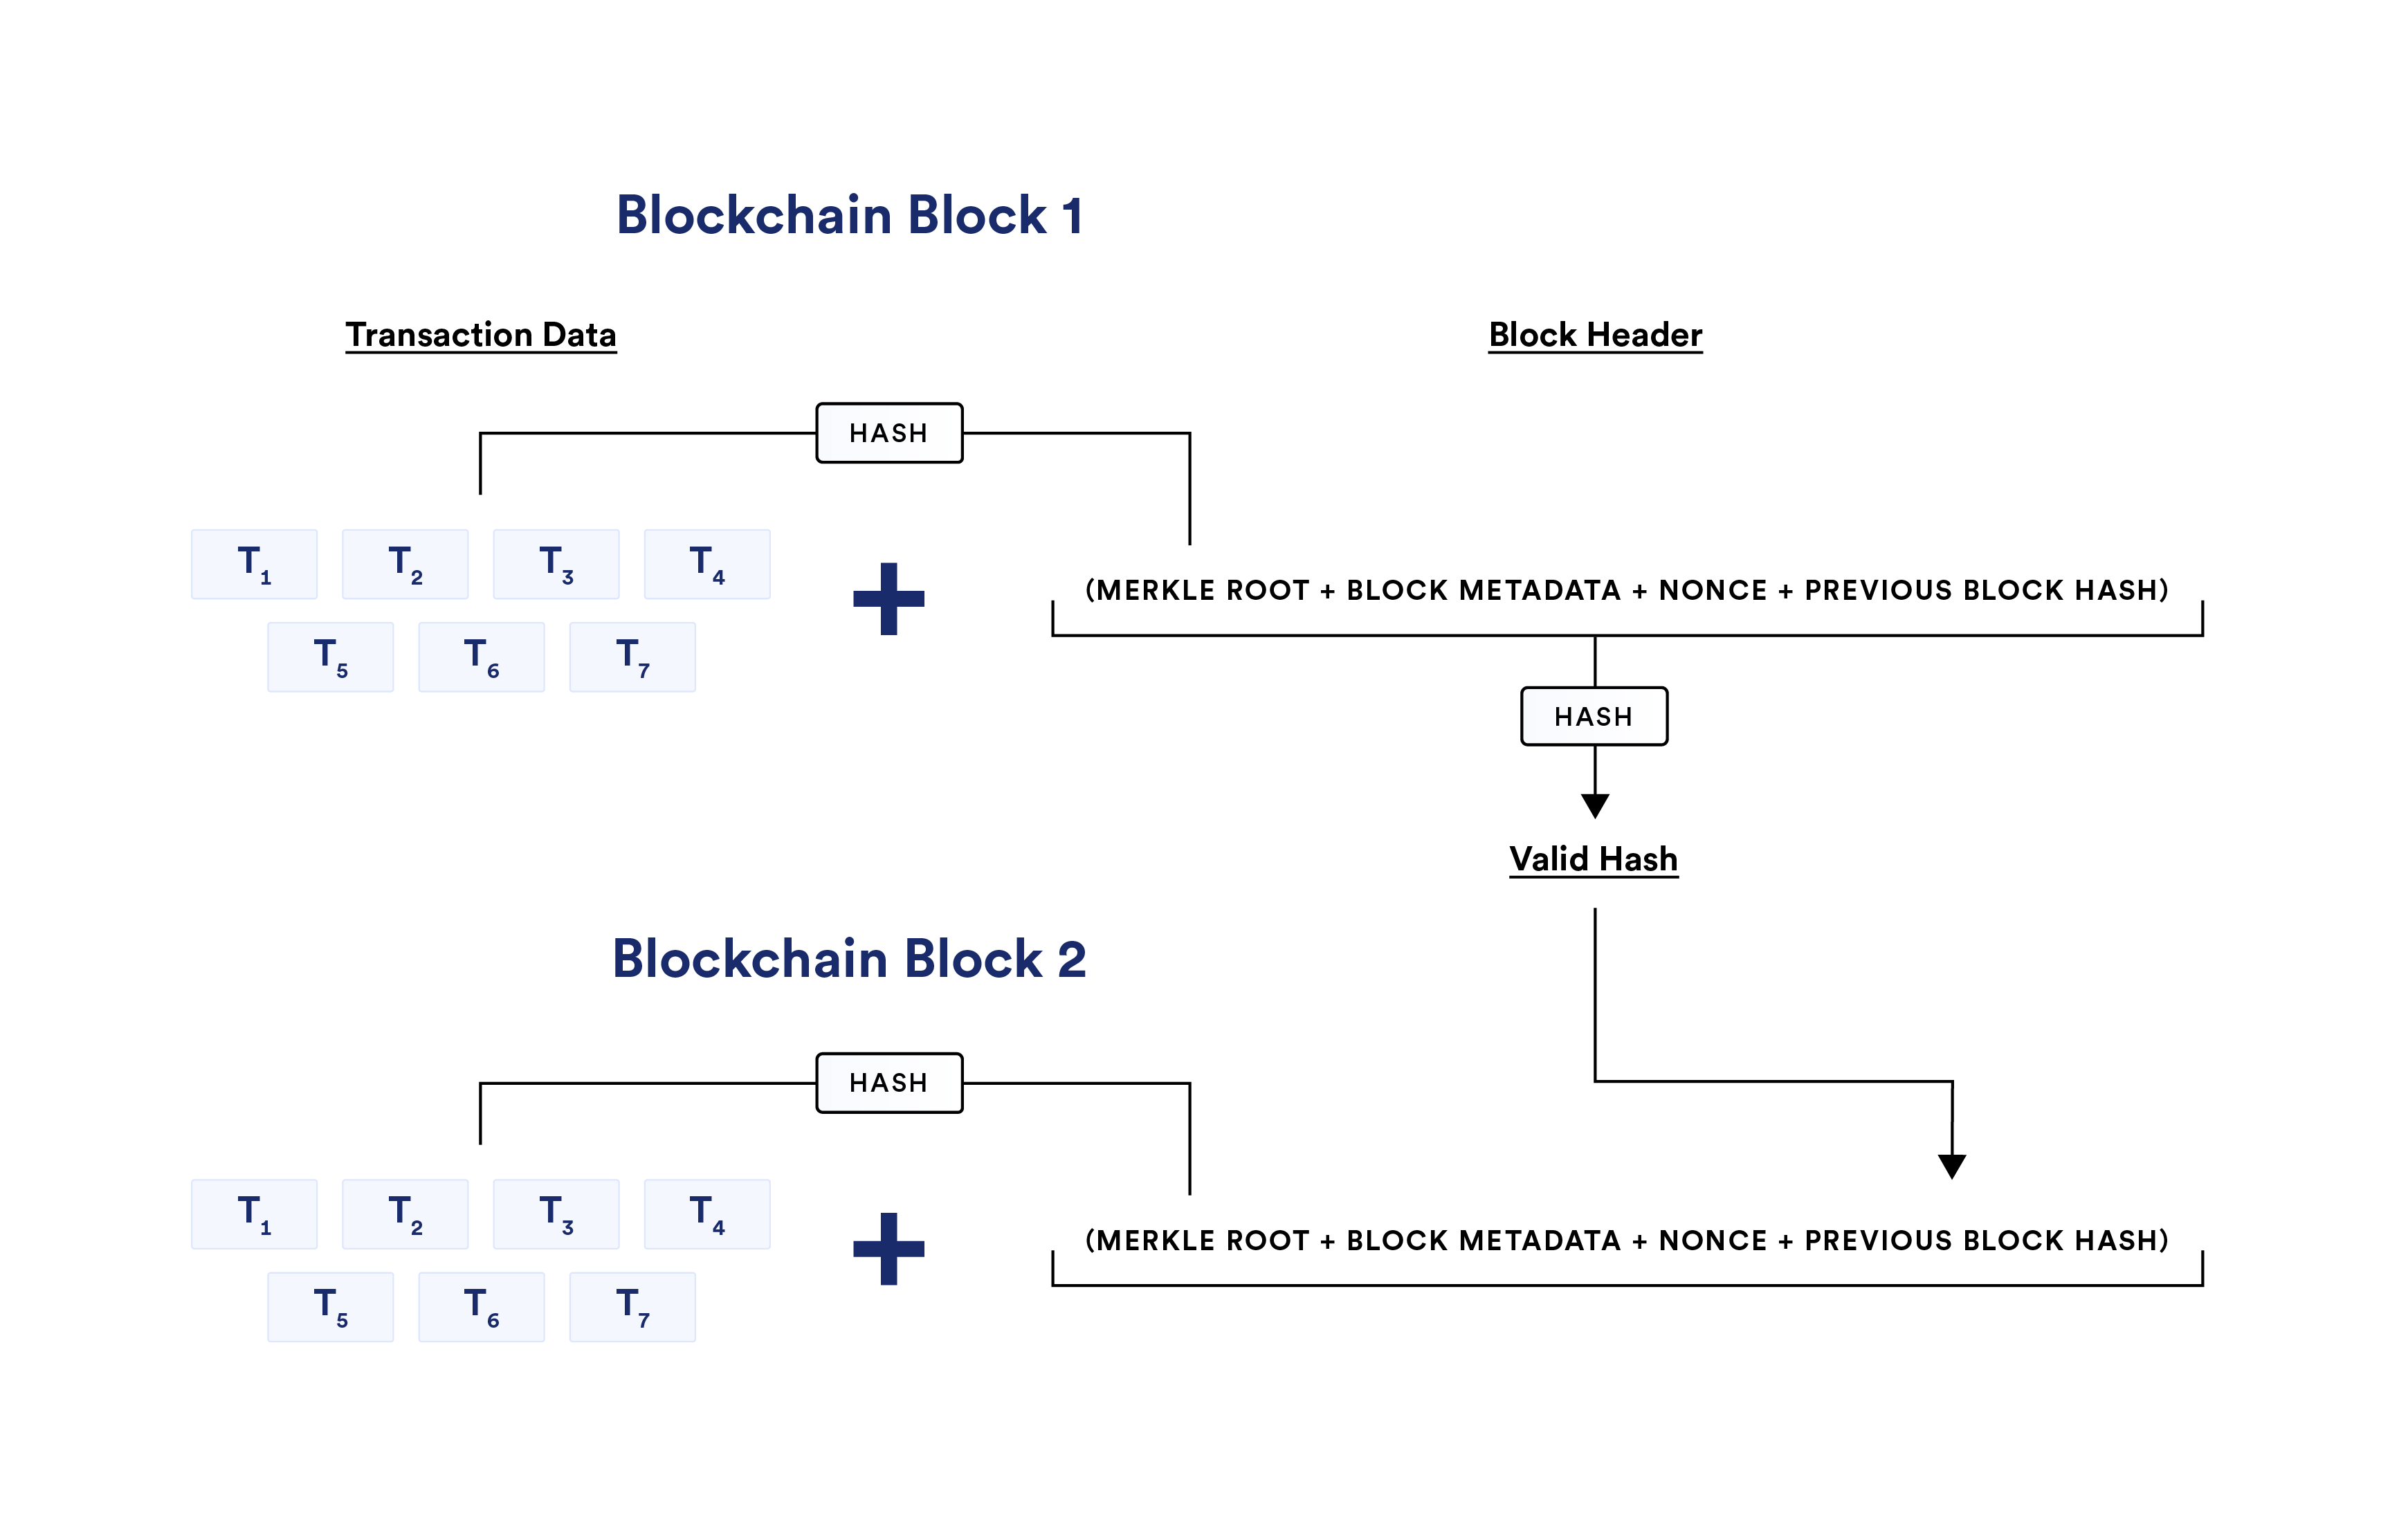 Blockchain blocks